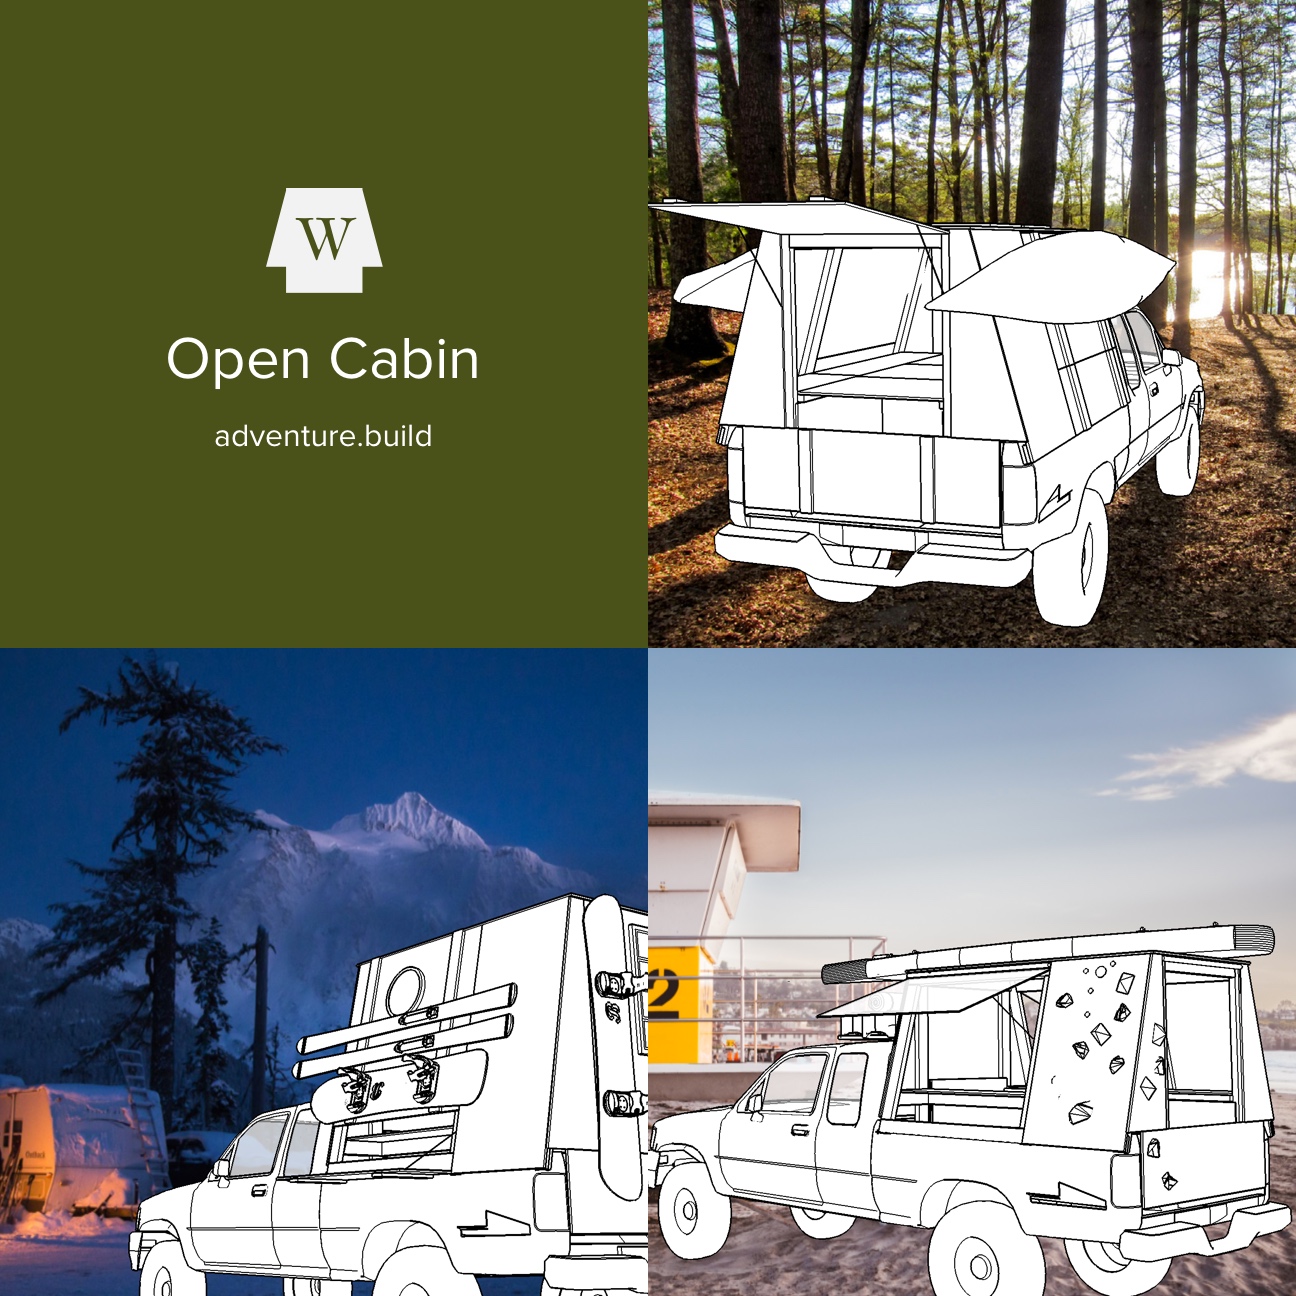 The Open Cabin: adventure you build!